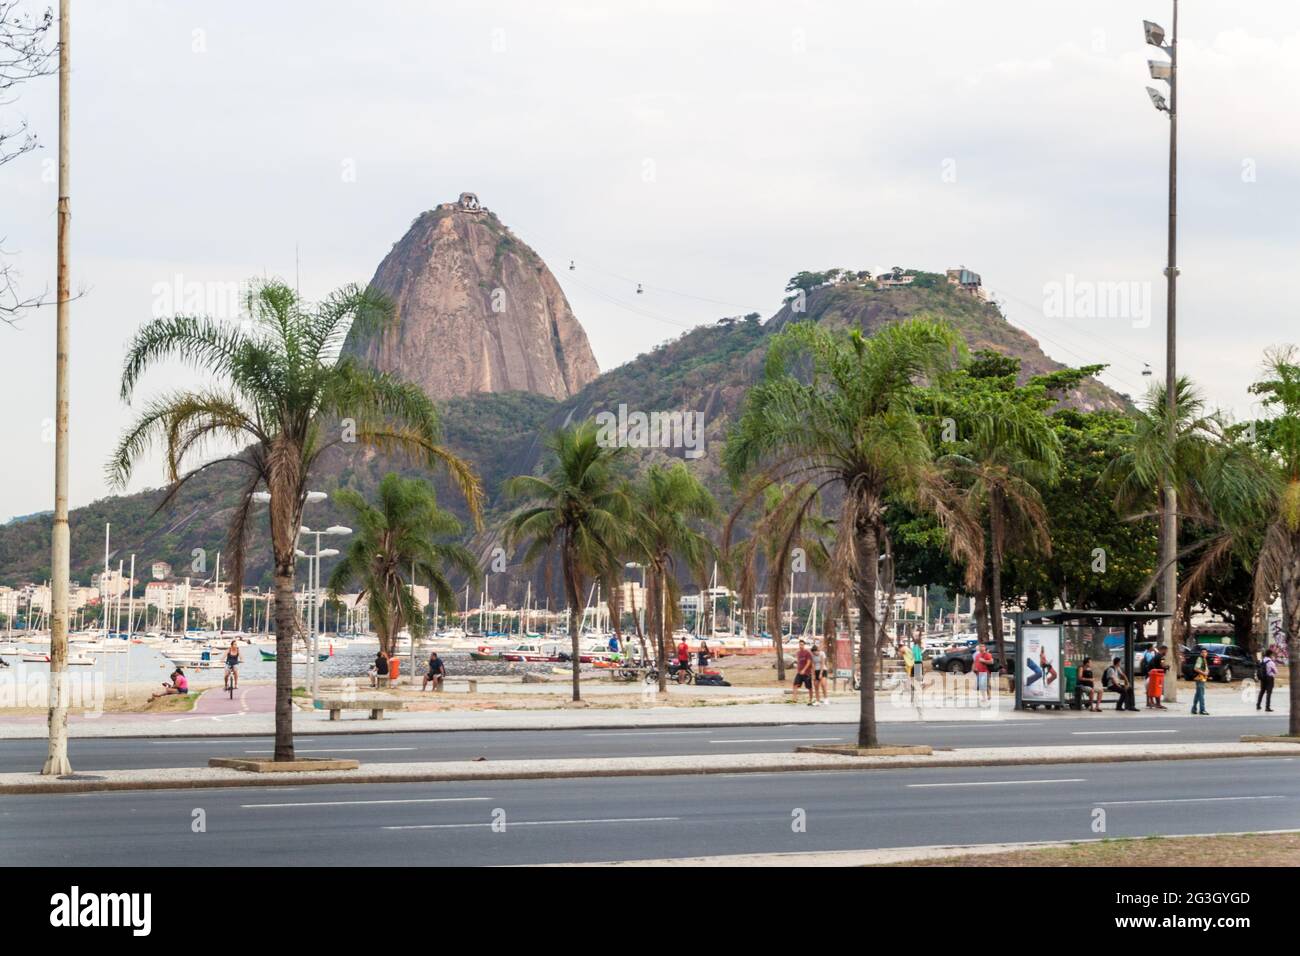 RIO DE JANEIRO, BRAZIL - JANUARY 27, 2015: View of Sugarloaf mountain in Rio de Janeiro. Stock Photo